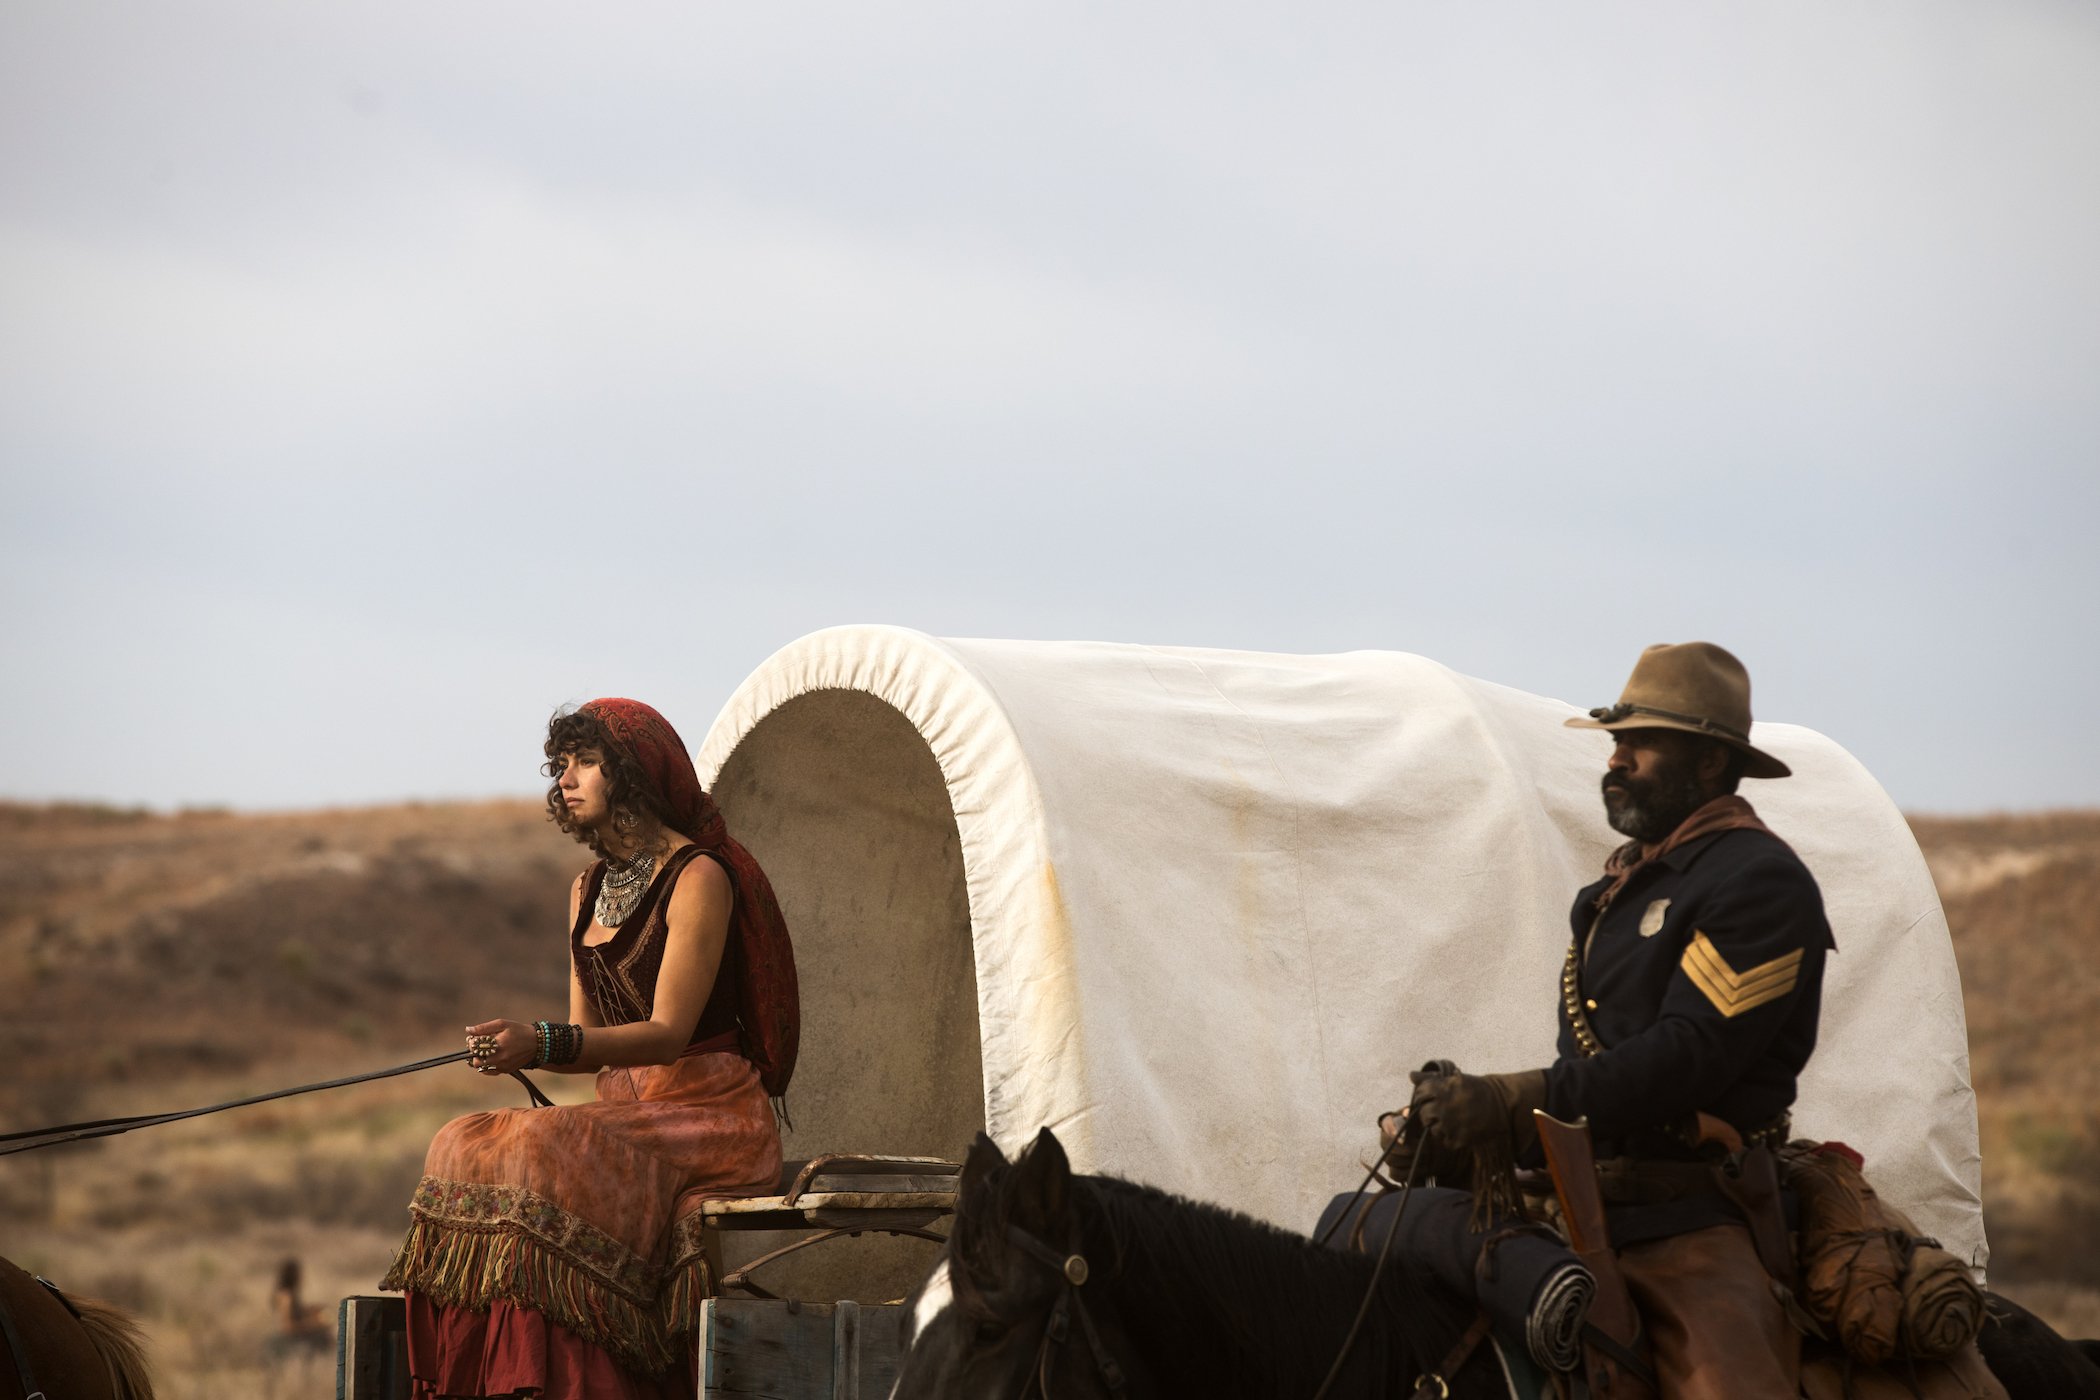 Gratiela Brancusi as Noemi and LaMonica Garrett as Thomas riding wagons next to each other in '1883'